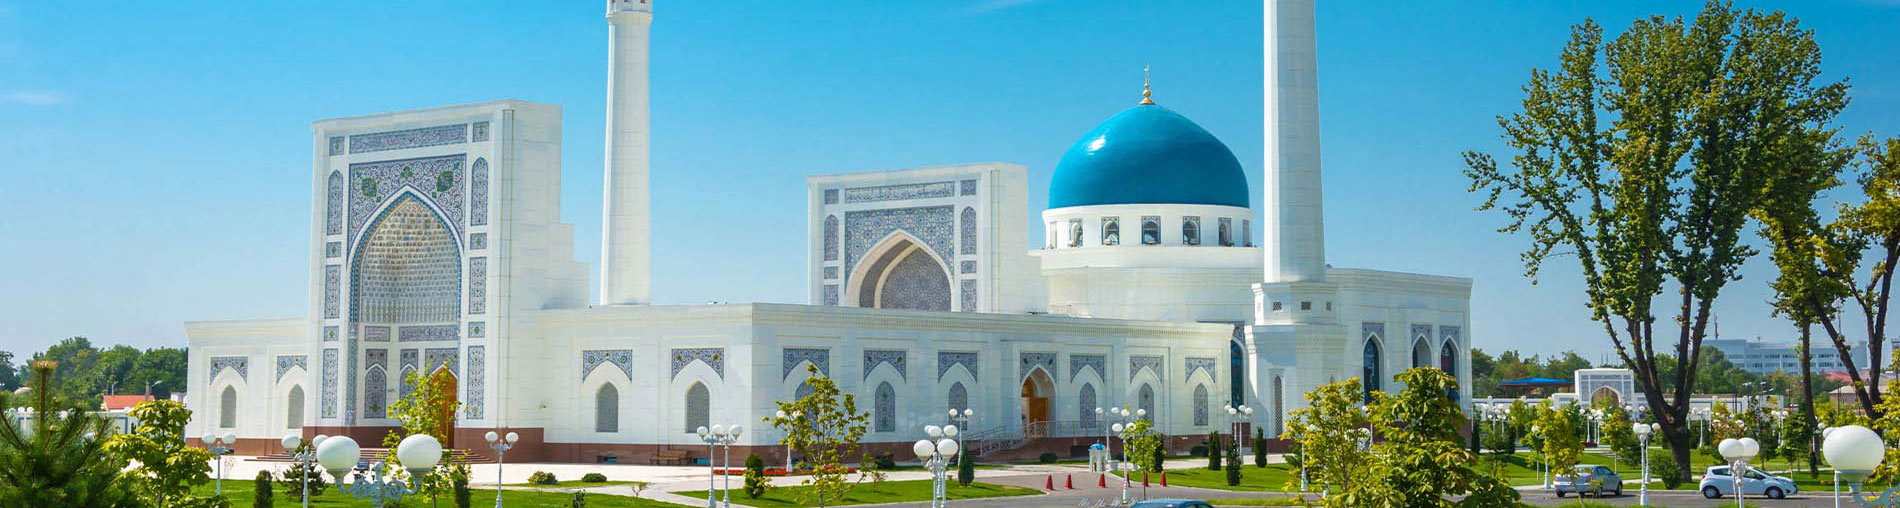 Uzbekistan Tour Package From India